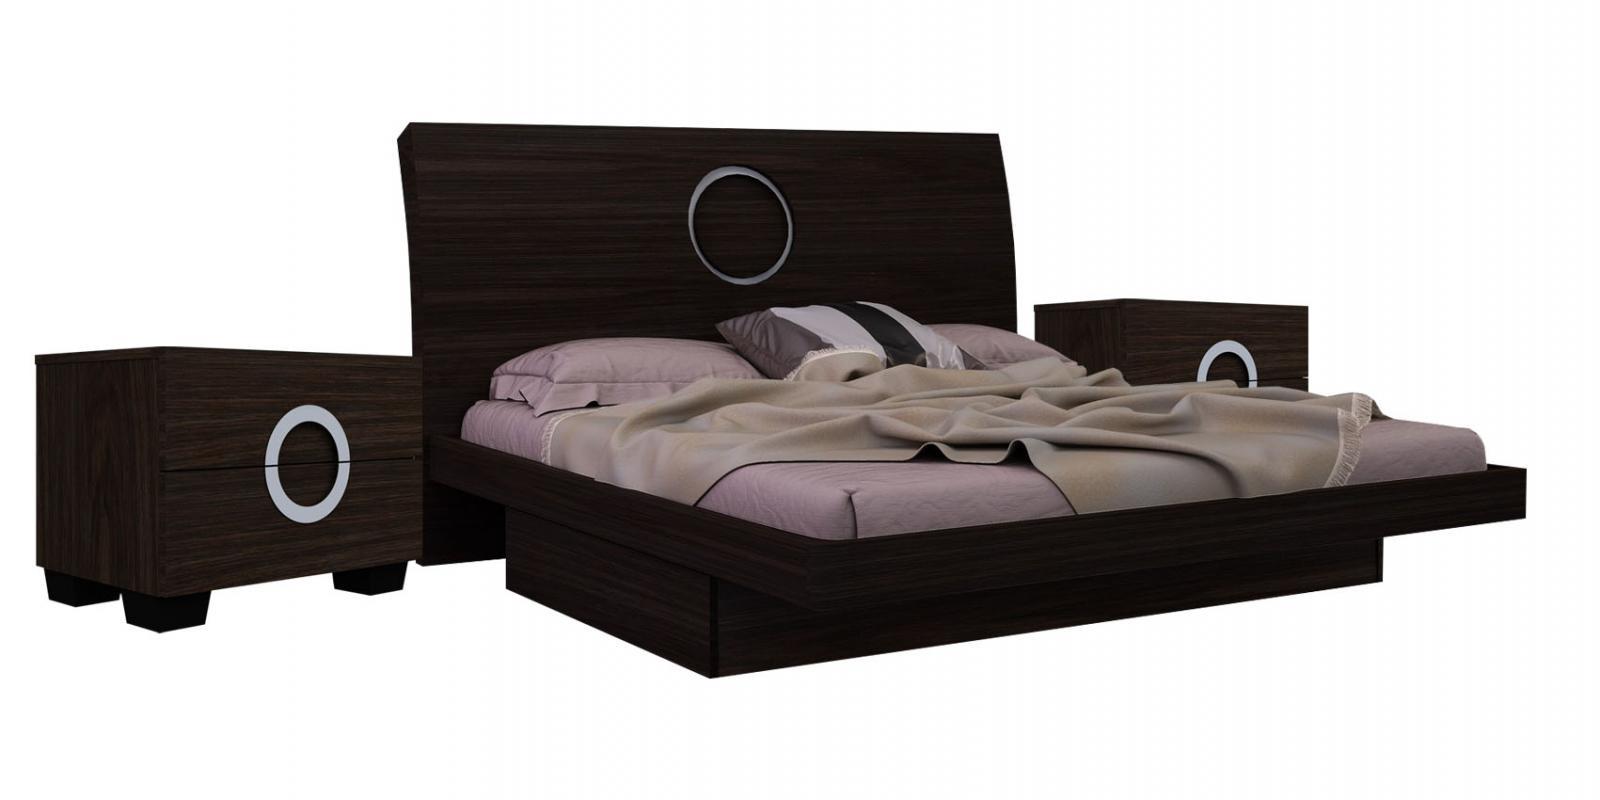 Contemporary, Modern Platform Bedroom Set Monte Carlo MONTE-SET-WENGE-CK-3-PC in Wenge Lacquer